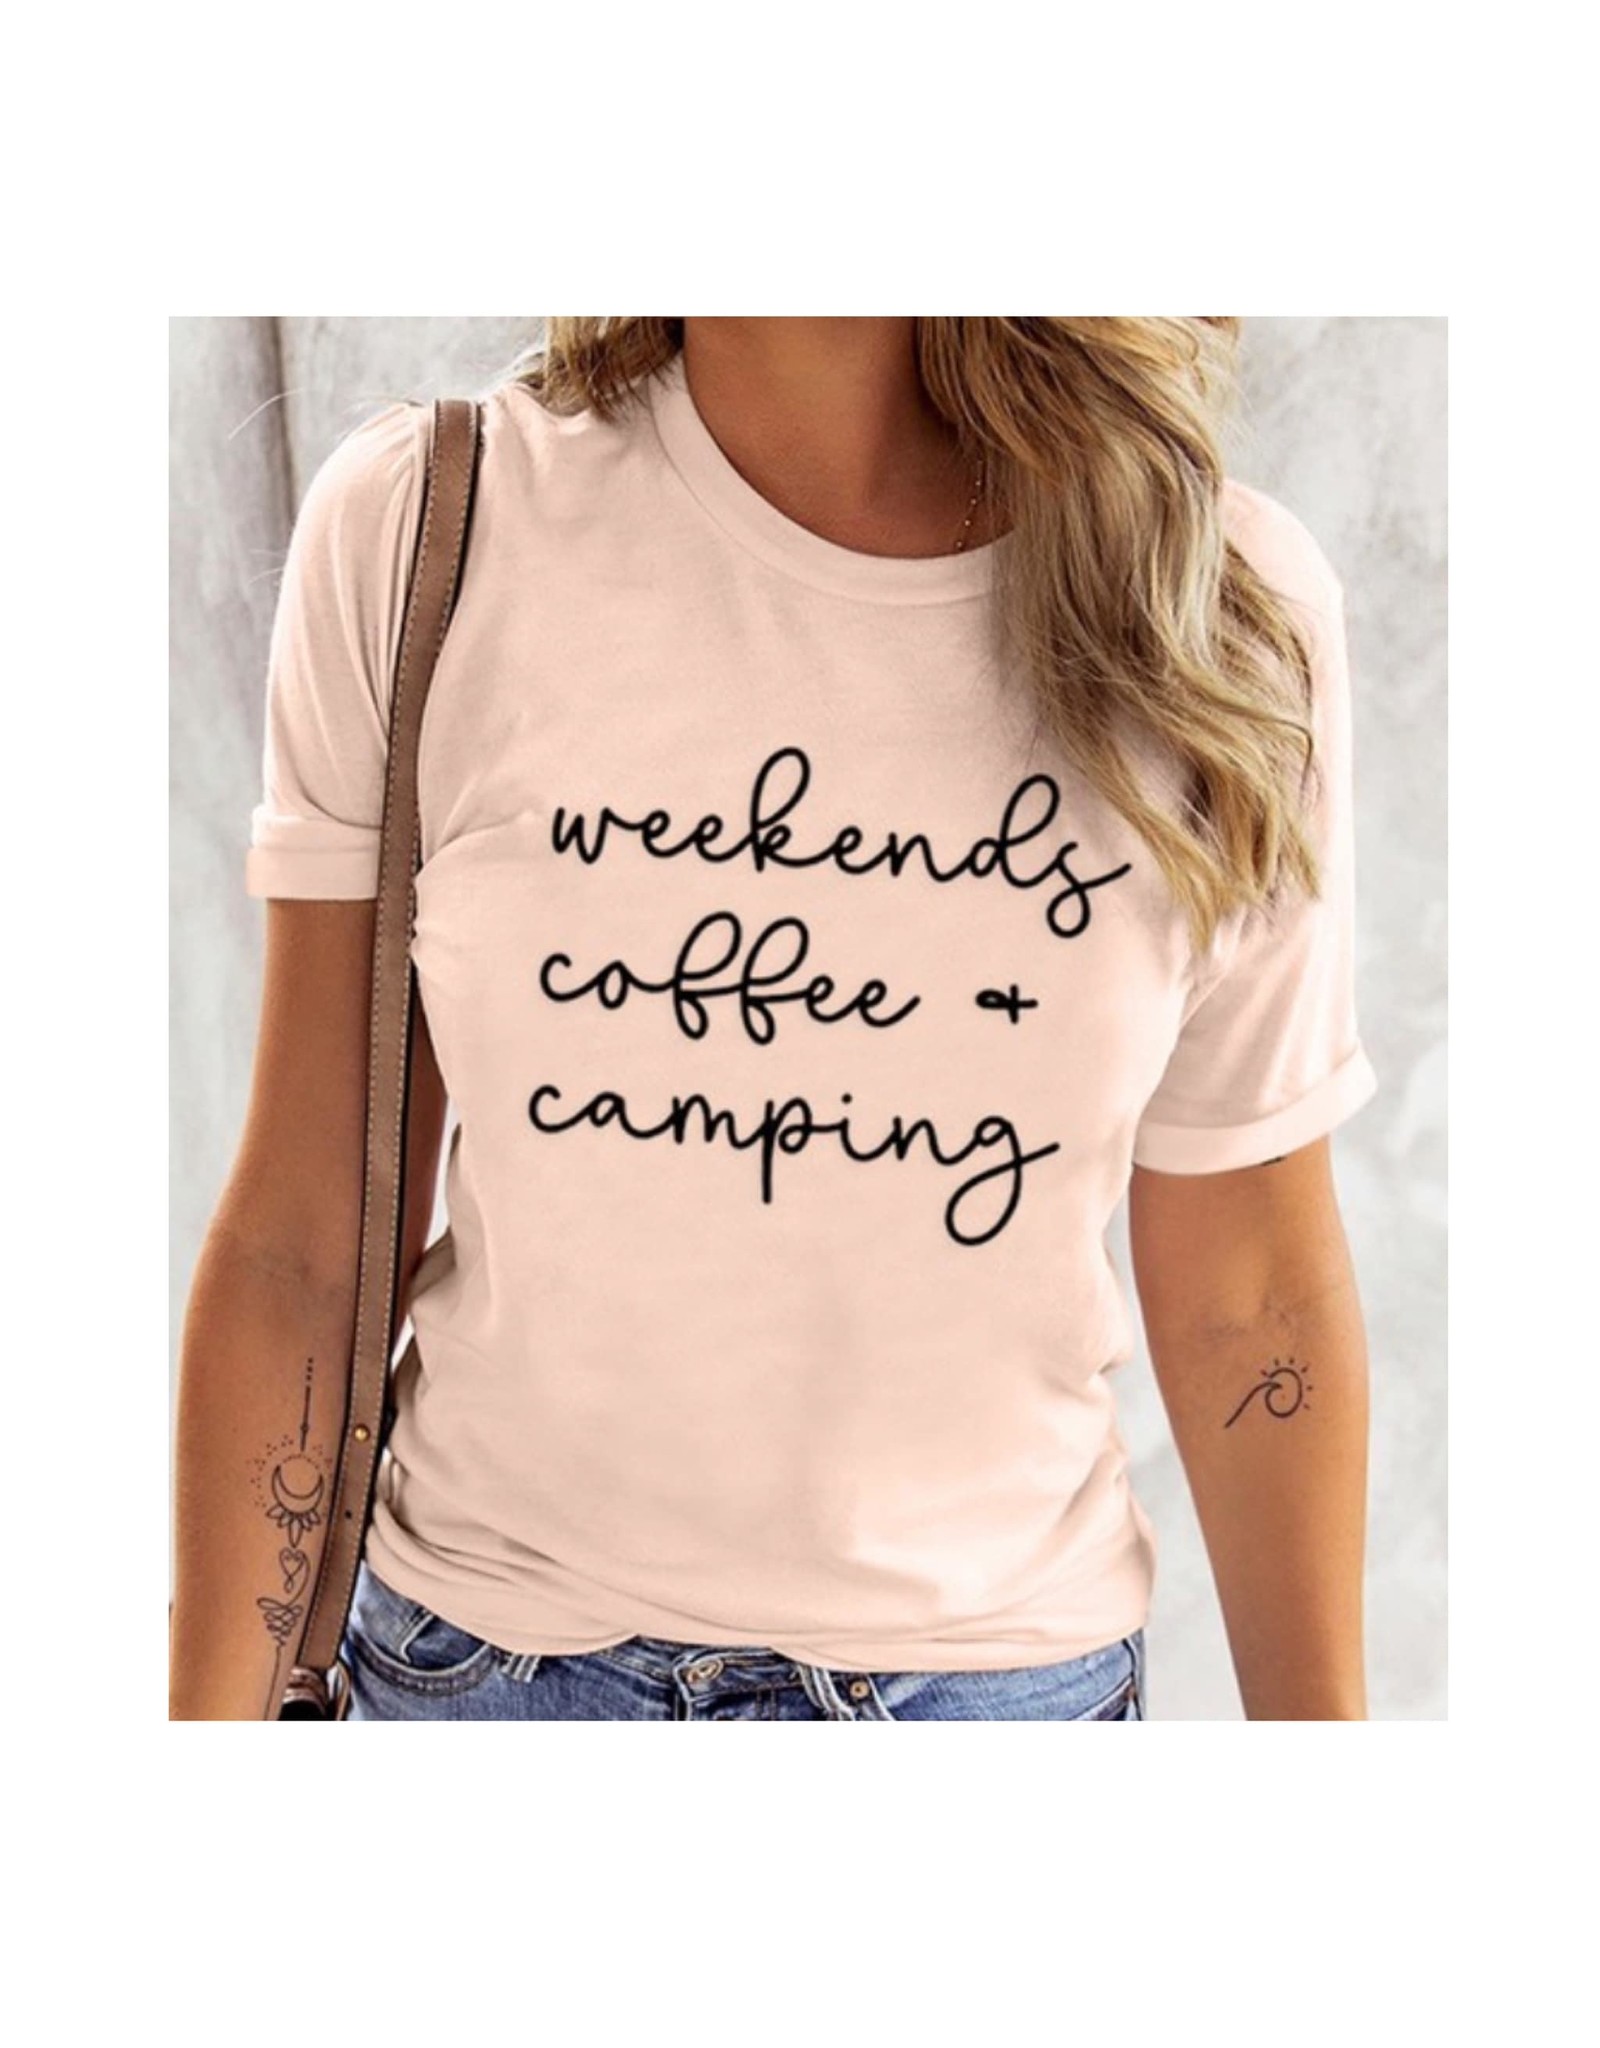 LATA Weekends, Coffee, & Camping Tee